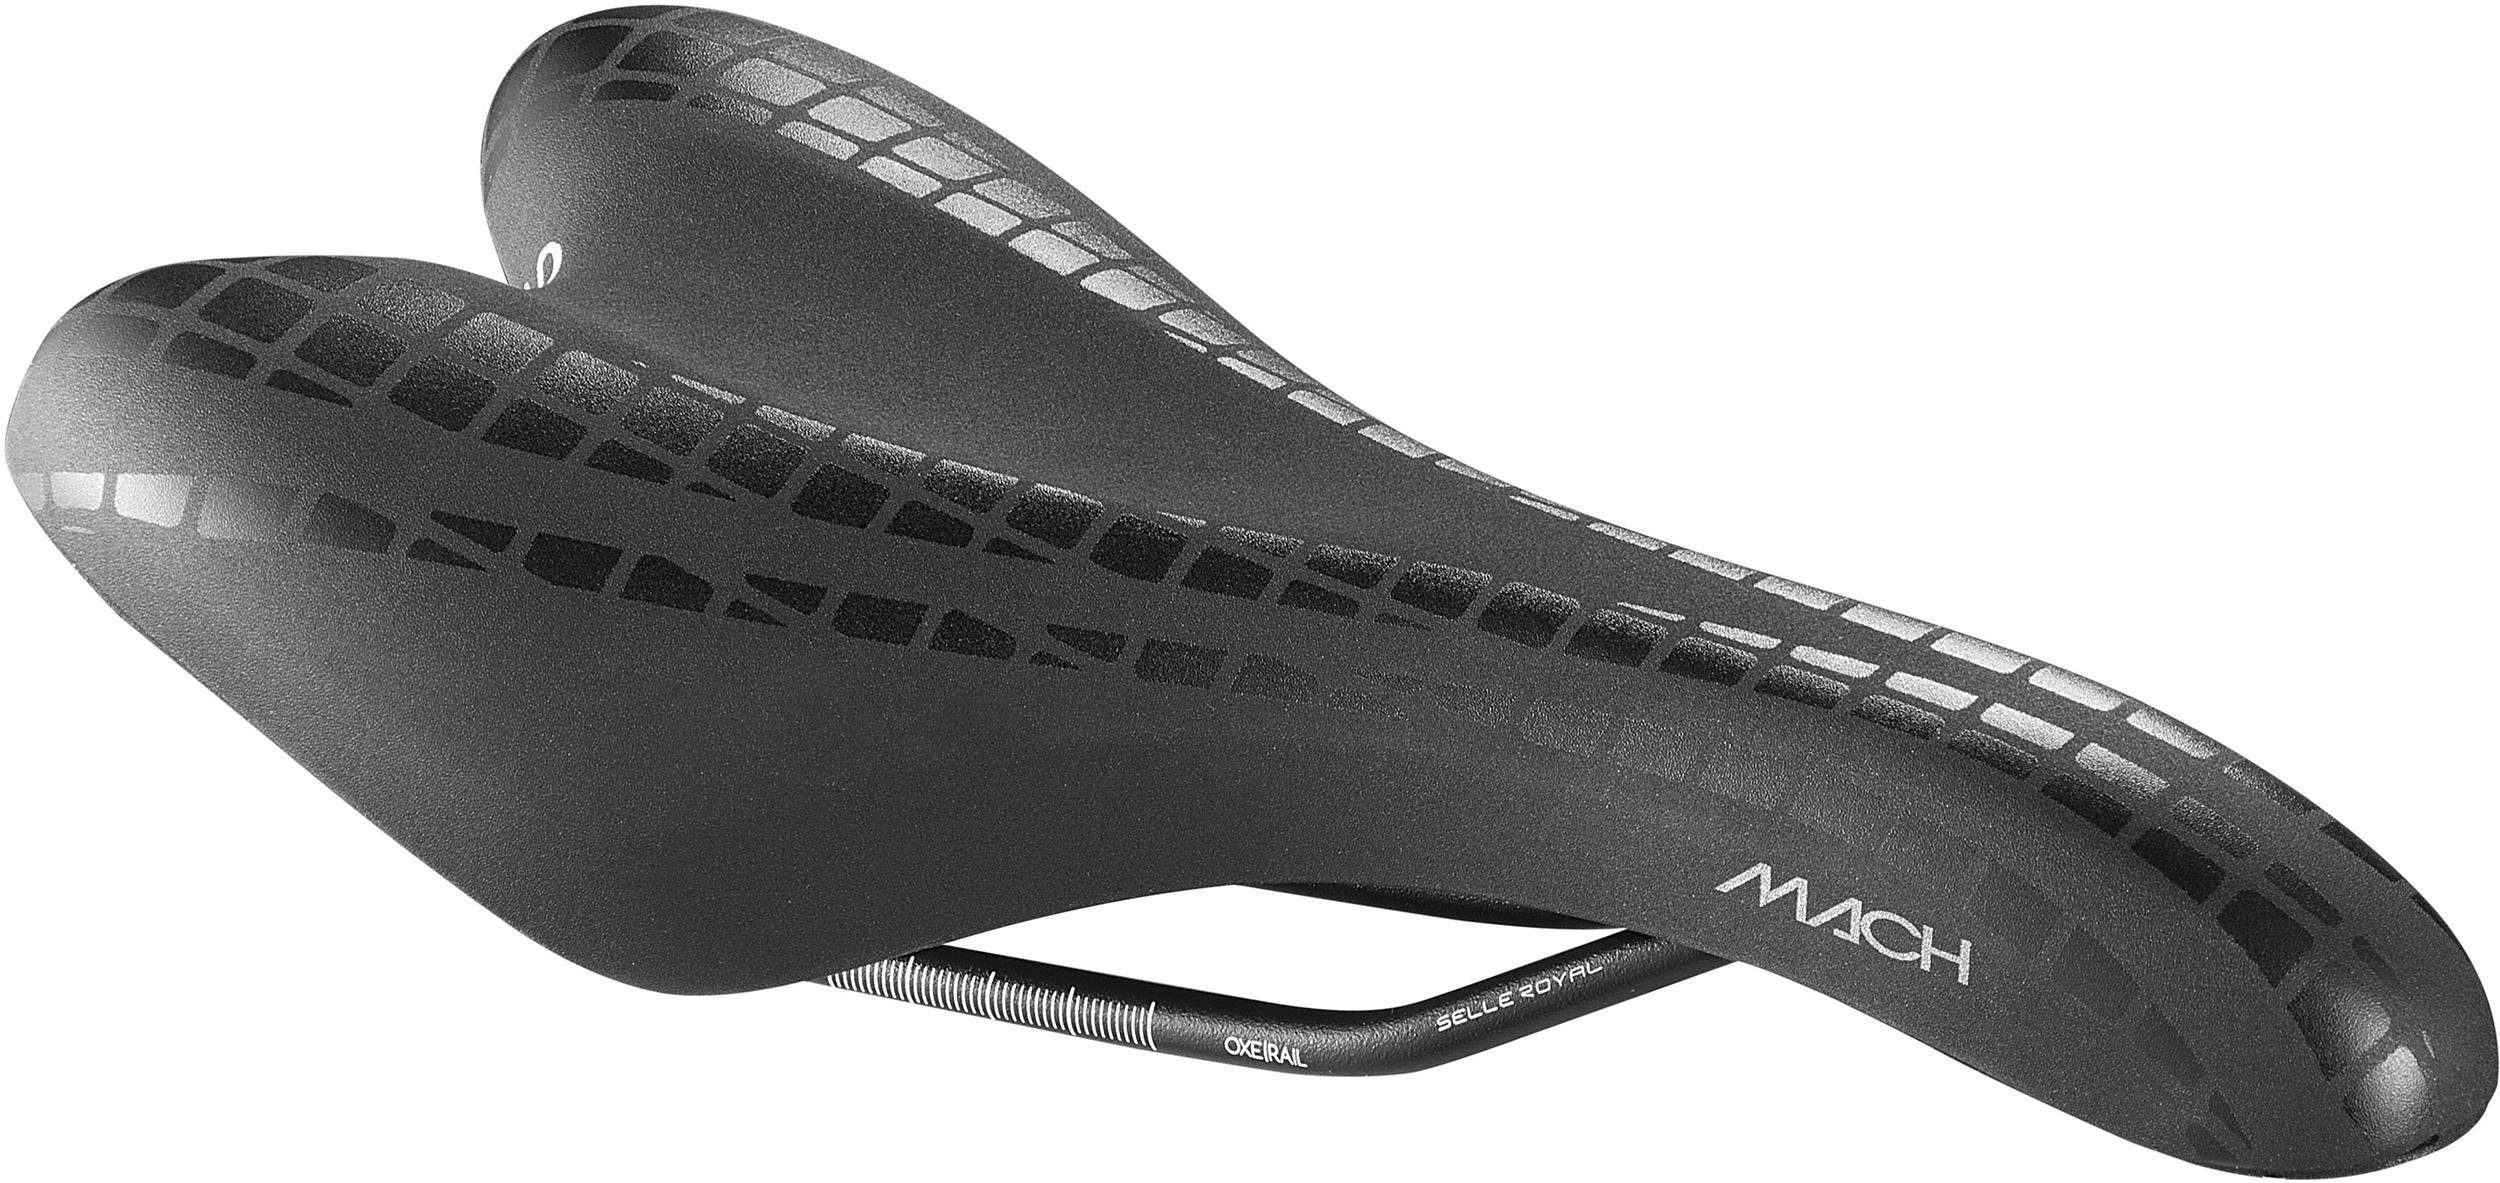 Fahrrad-Sattel // Unisex Classic Selle Royal Mach 2 Athletic